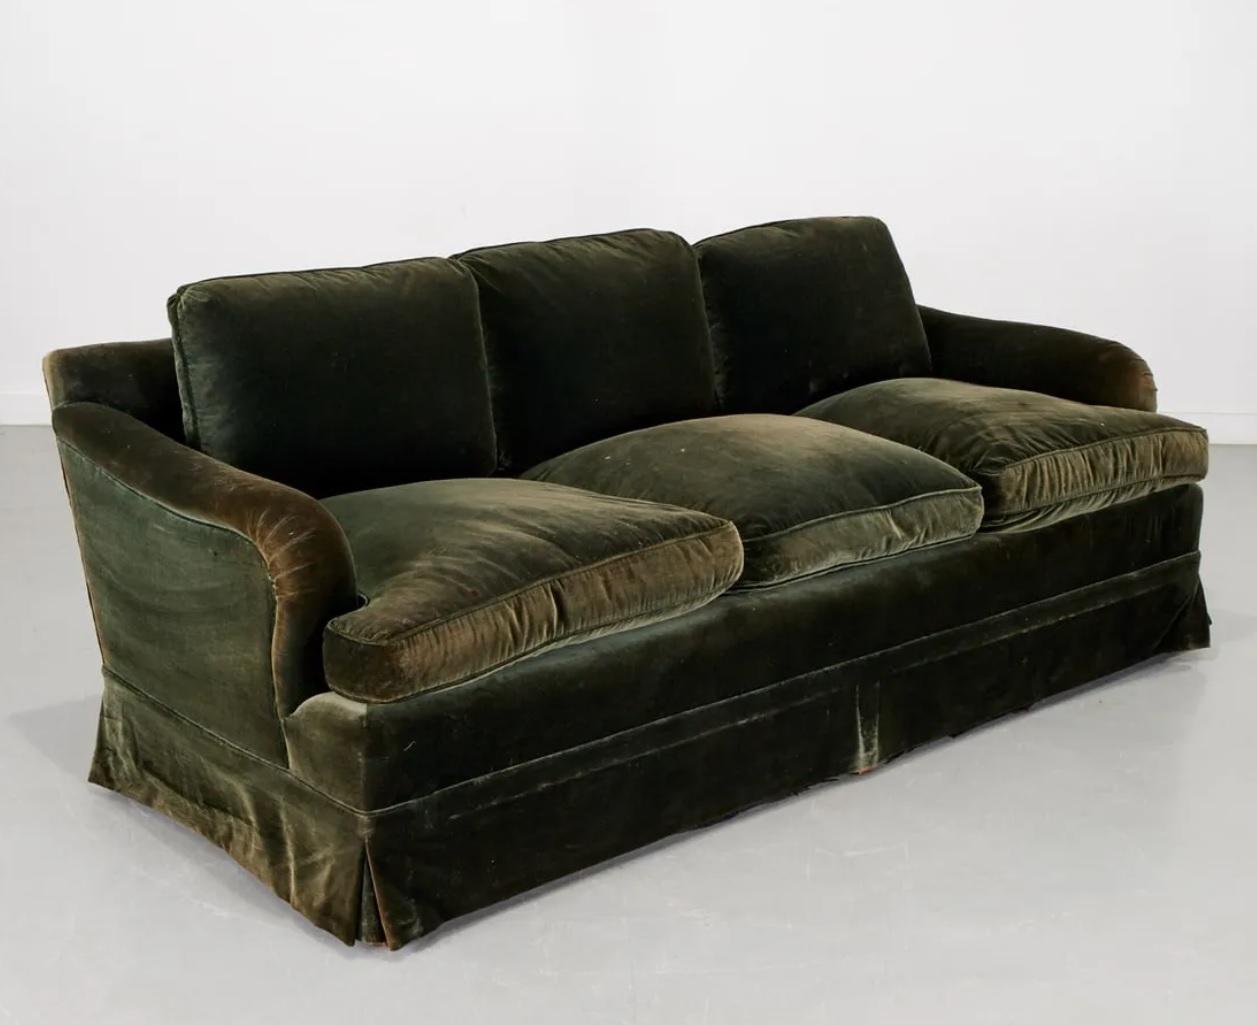 20th century English custom-made 3-seat saddle arm sofa in dark moss green velvet. Wood legs, condition as shown. 